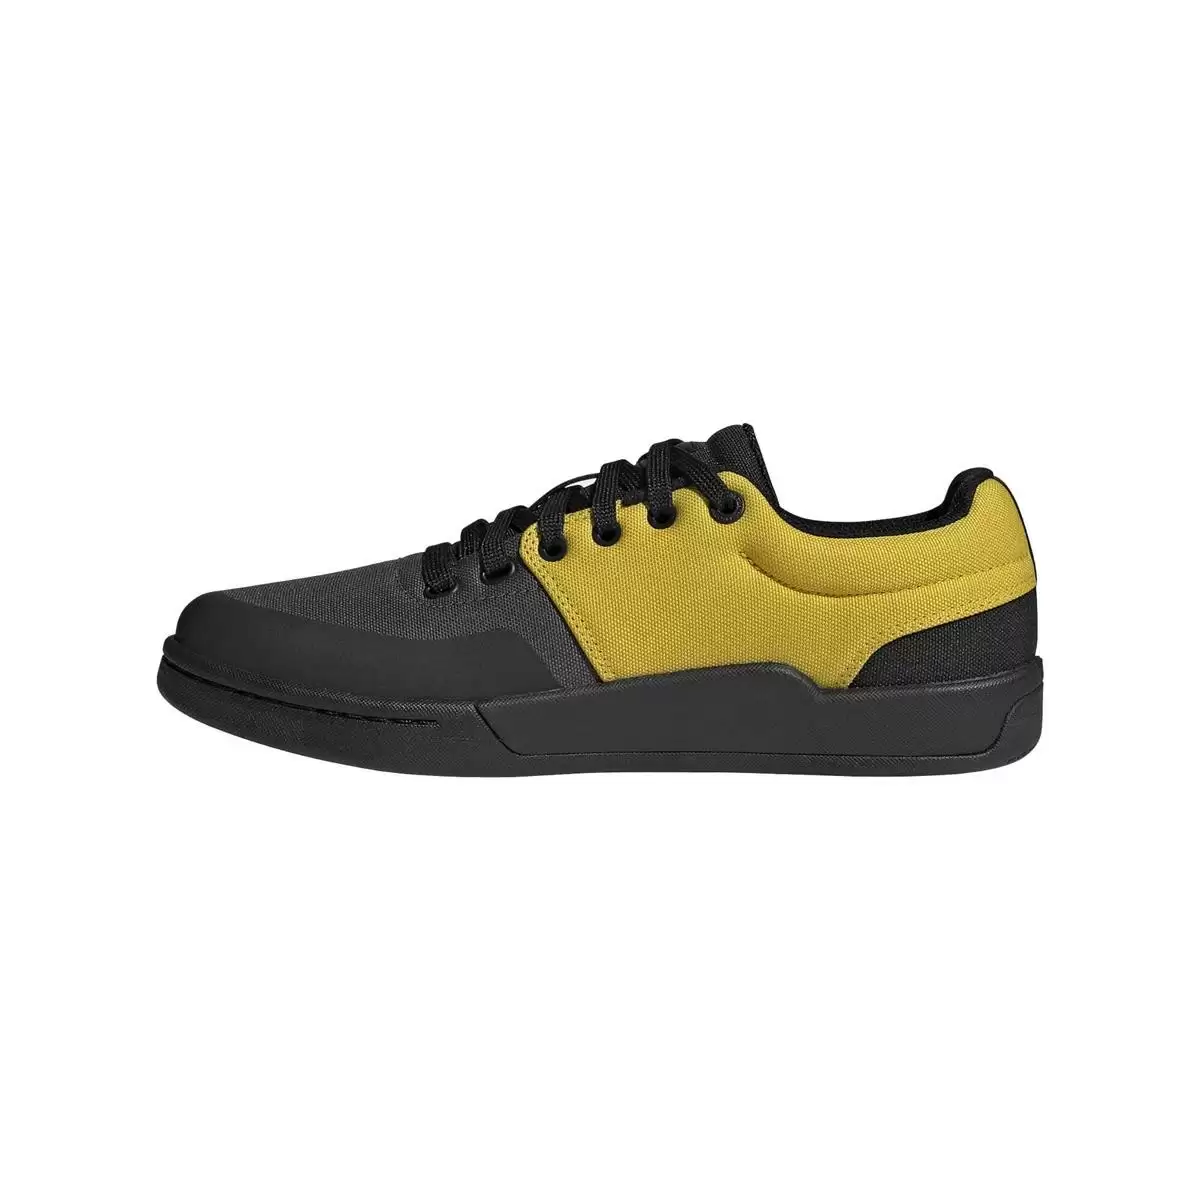 MTB Flat Shoes Freerider Pro Primeblue Black/Yellow Size 44 #2